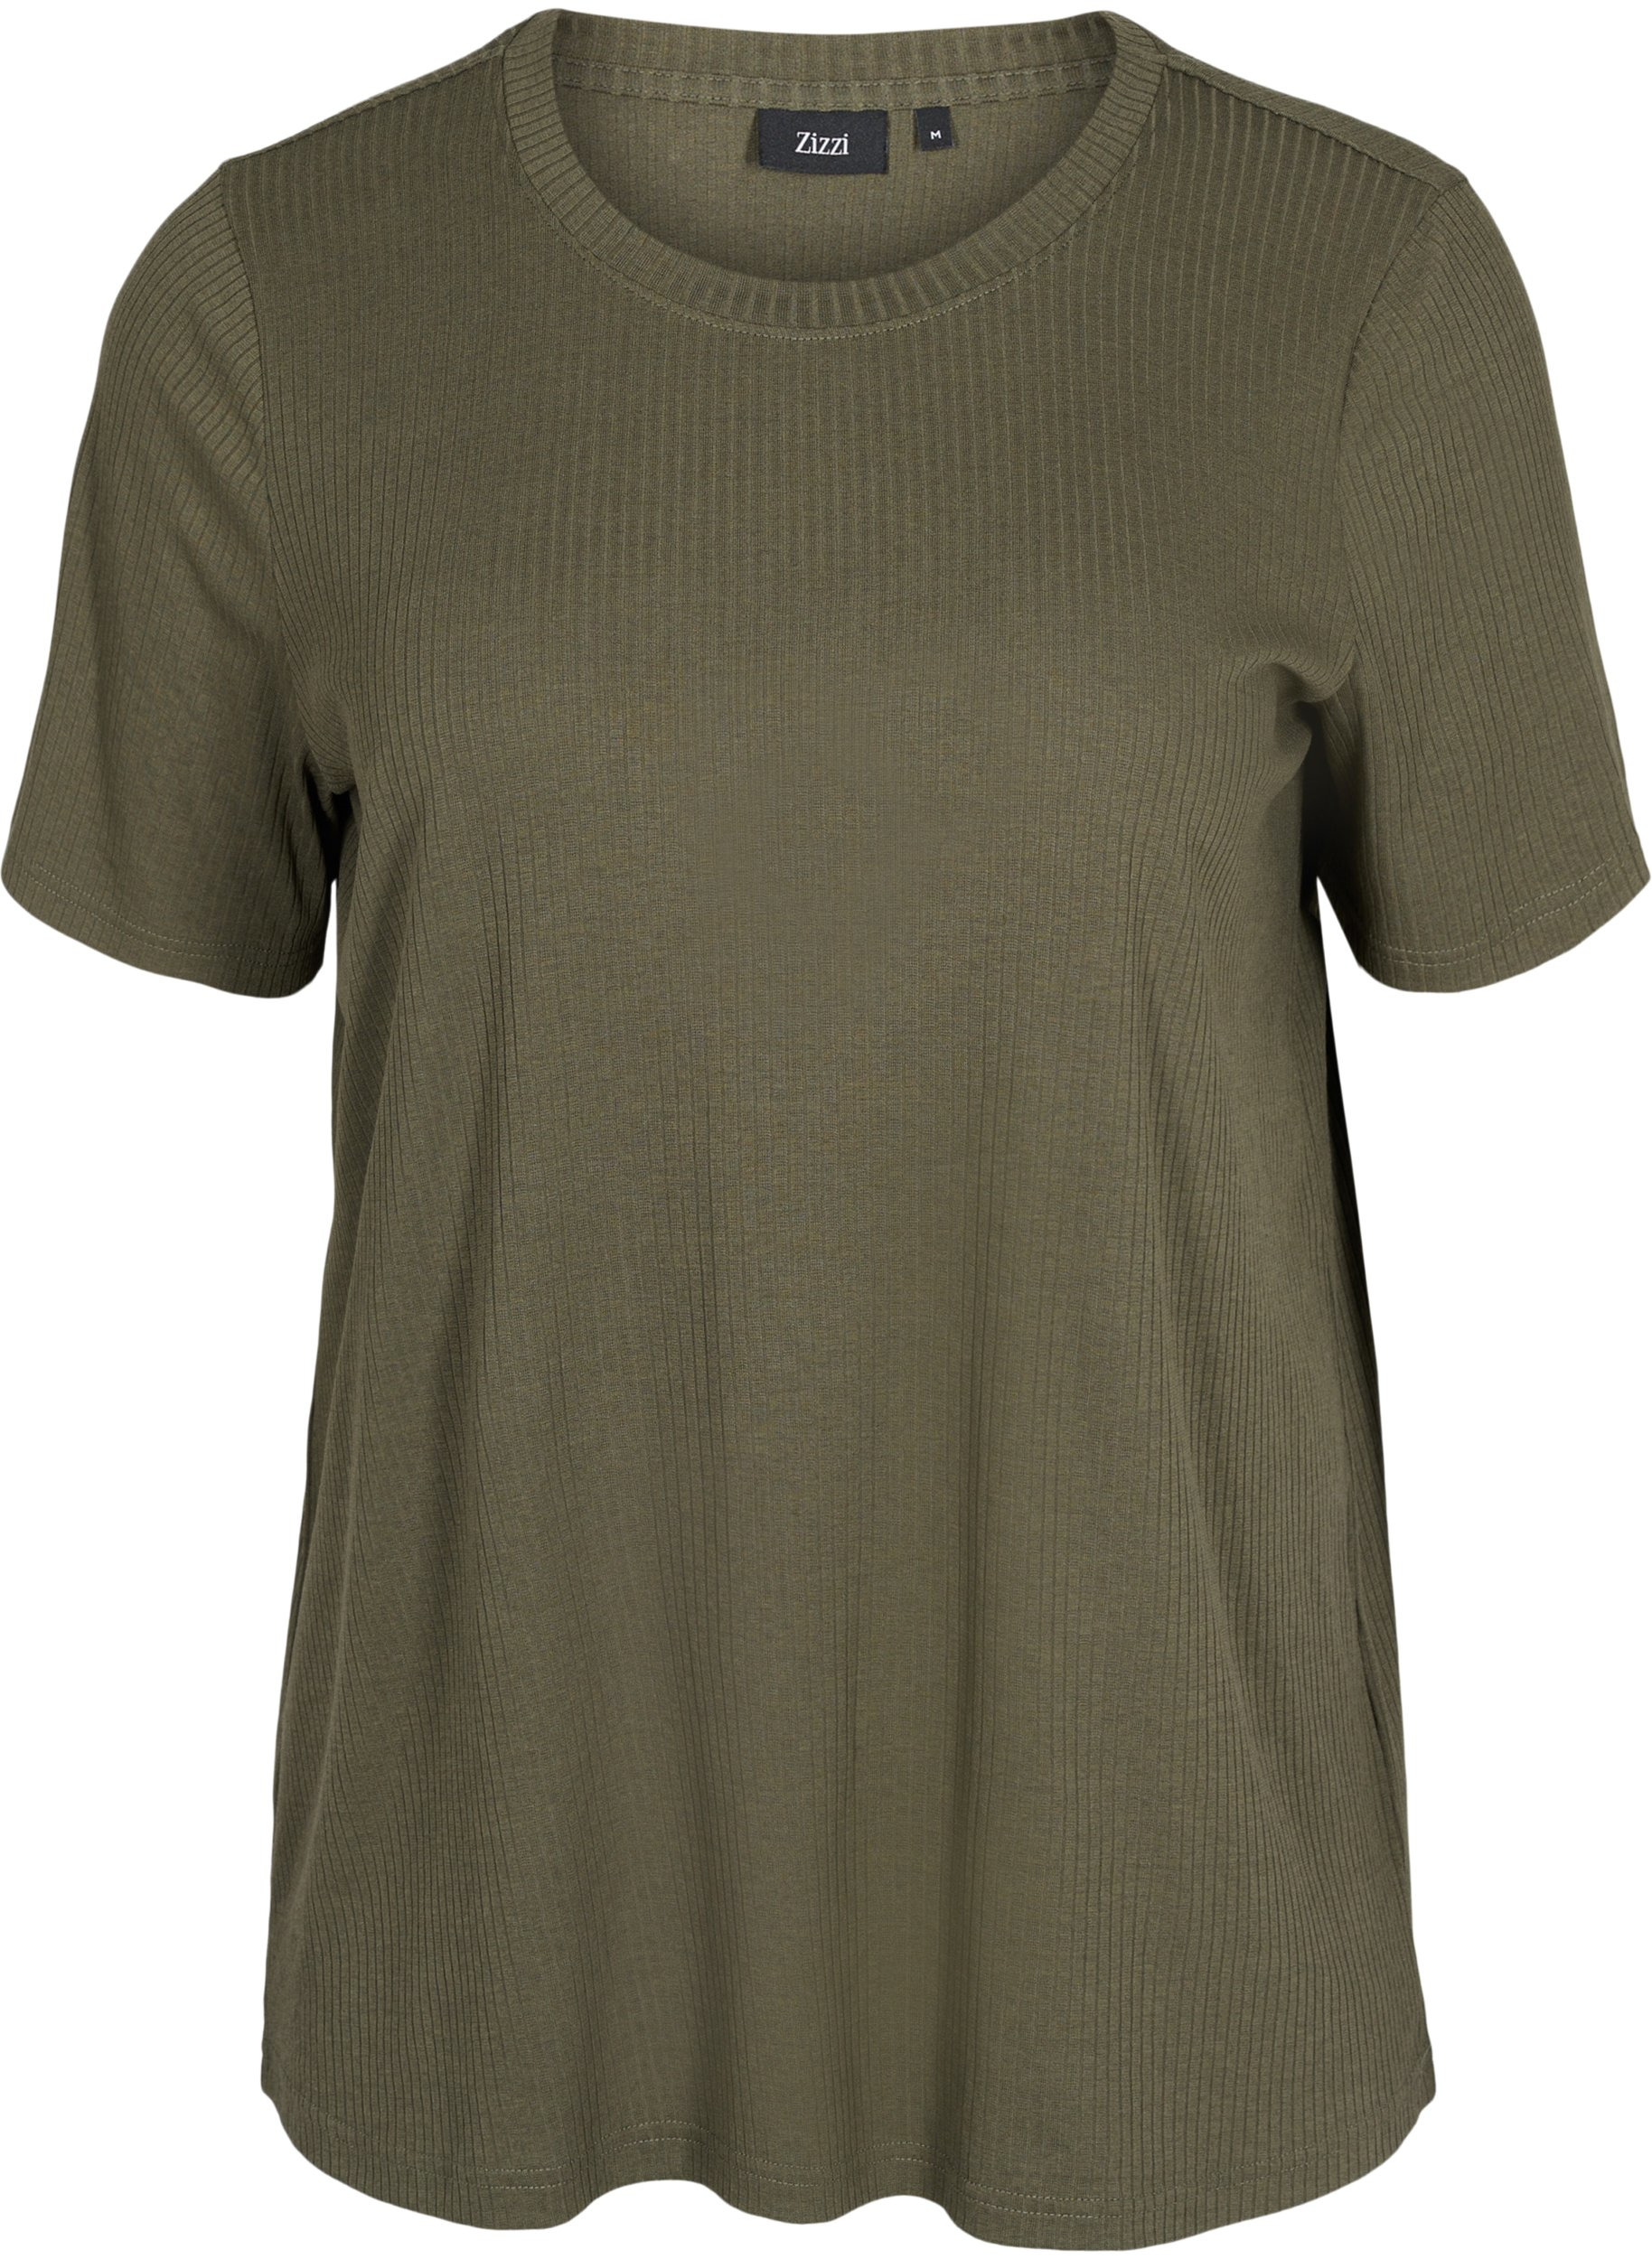 Ribbad t-shirt, Dusty Olive, Packshot